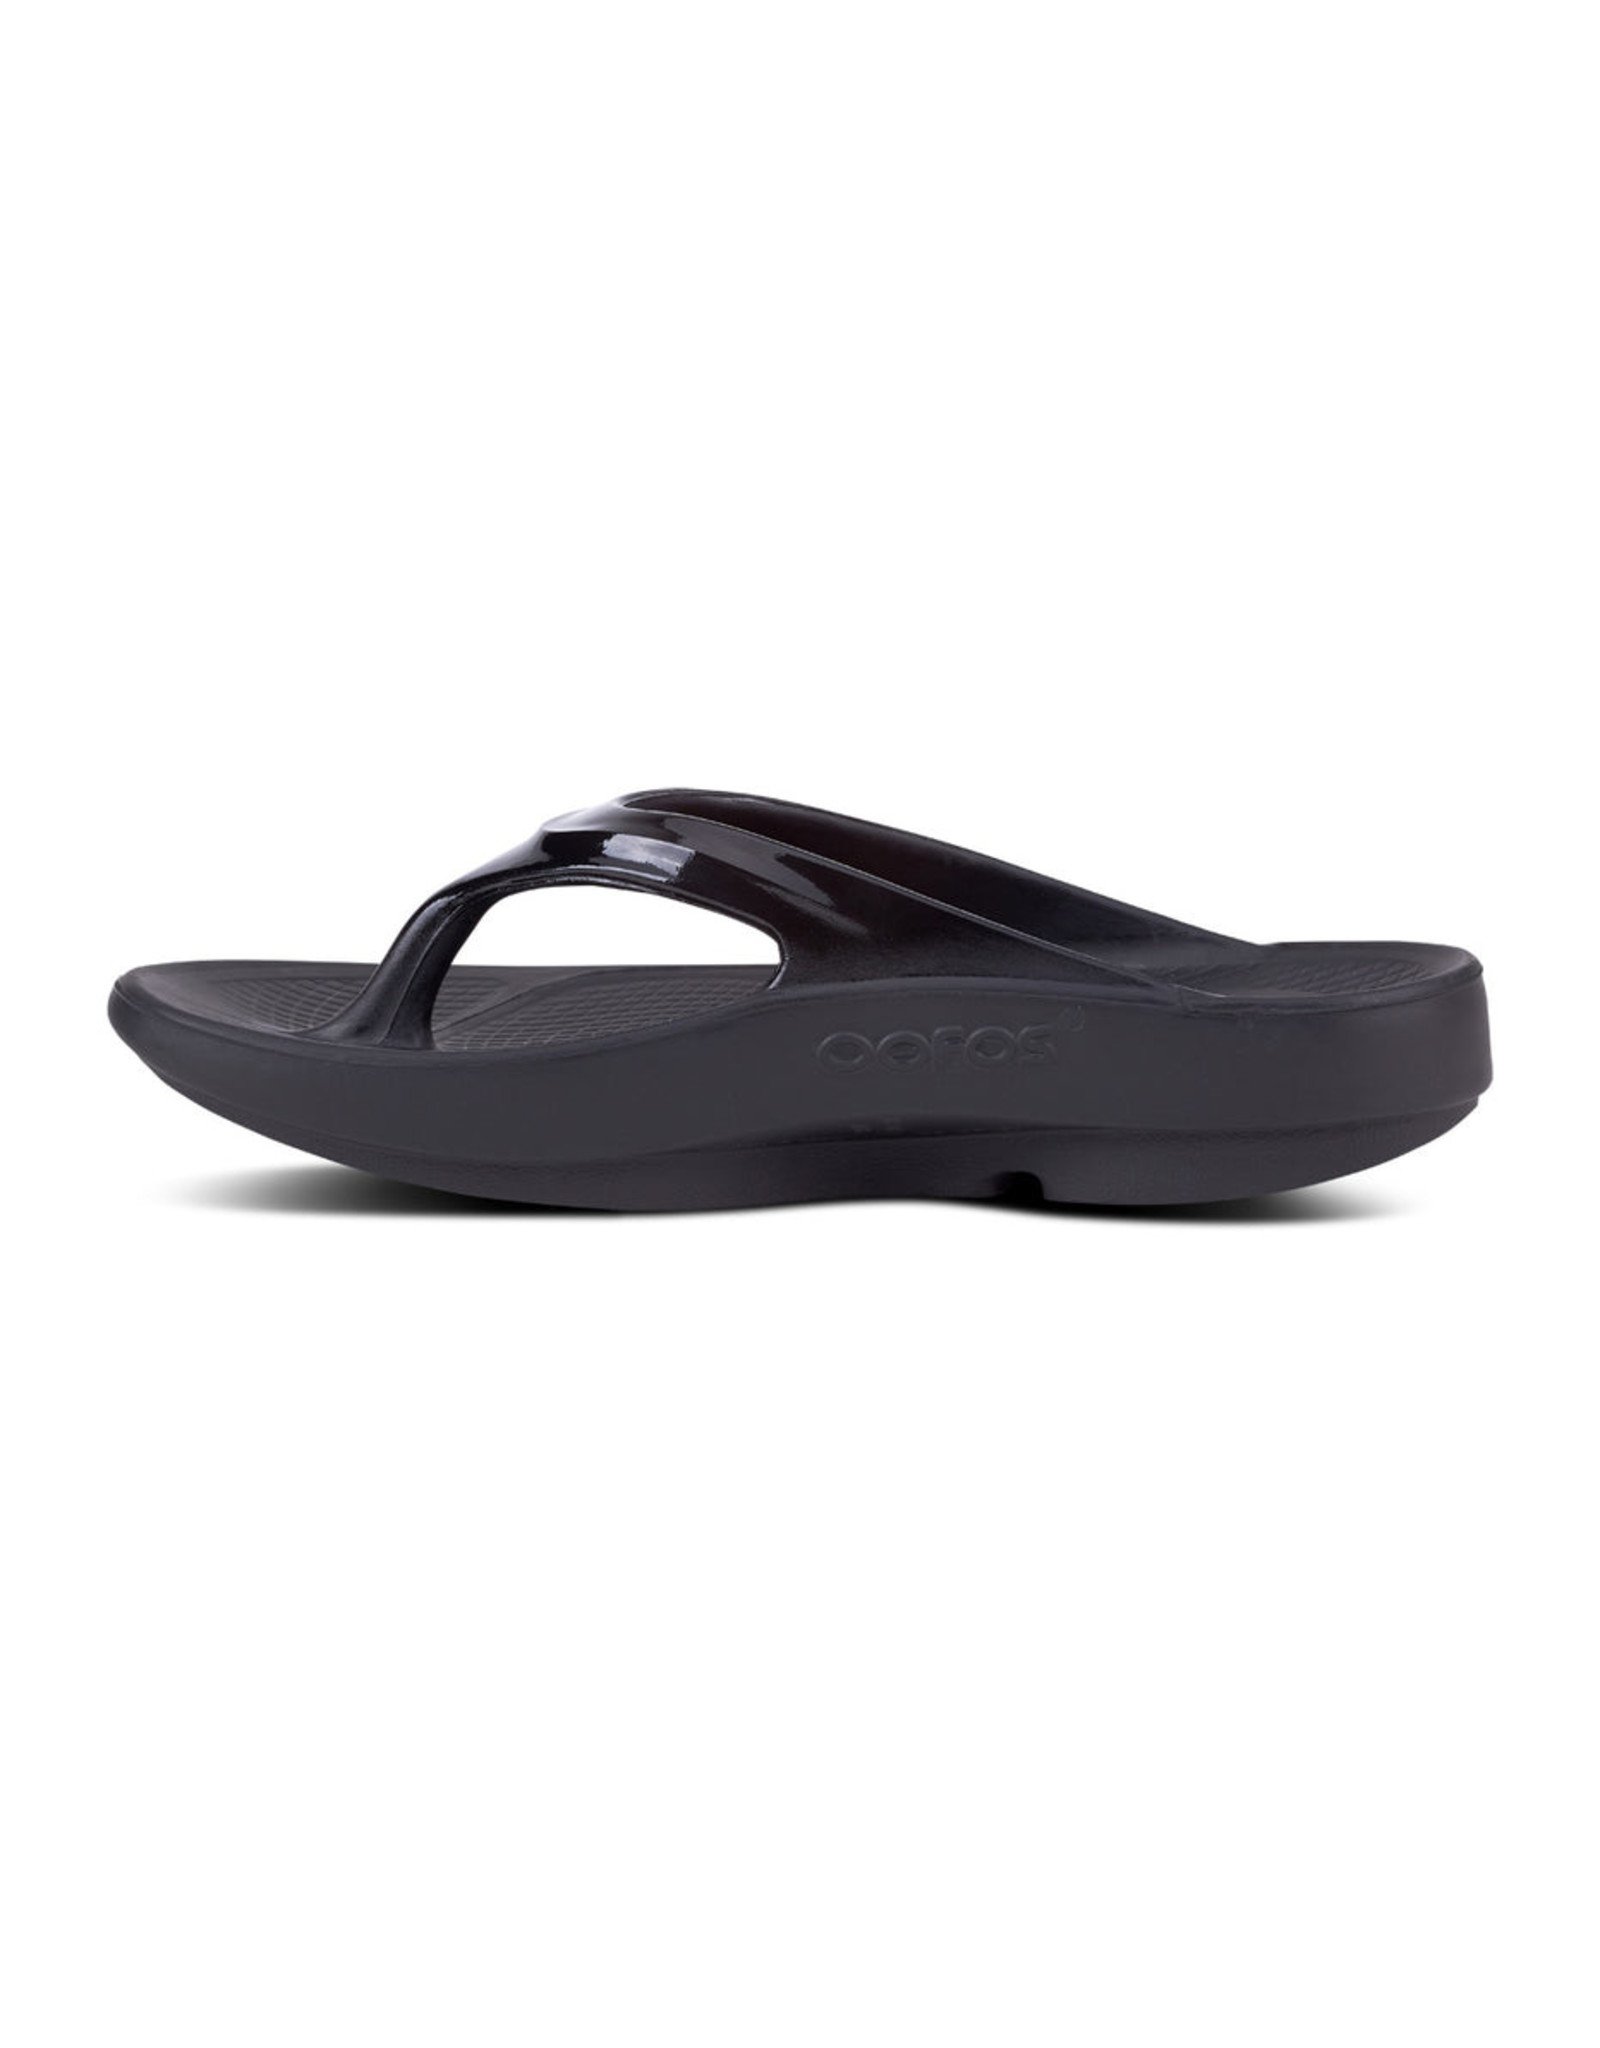 WOMEN'S OOLALA SANDAL-BLACK - Bend Shoe Co